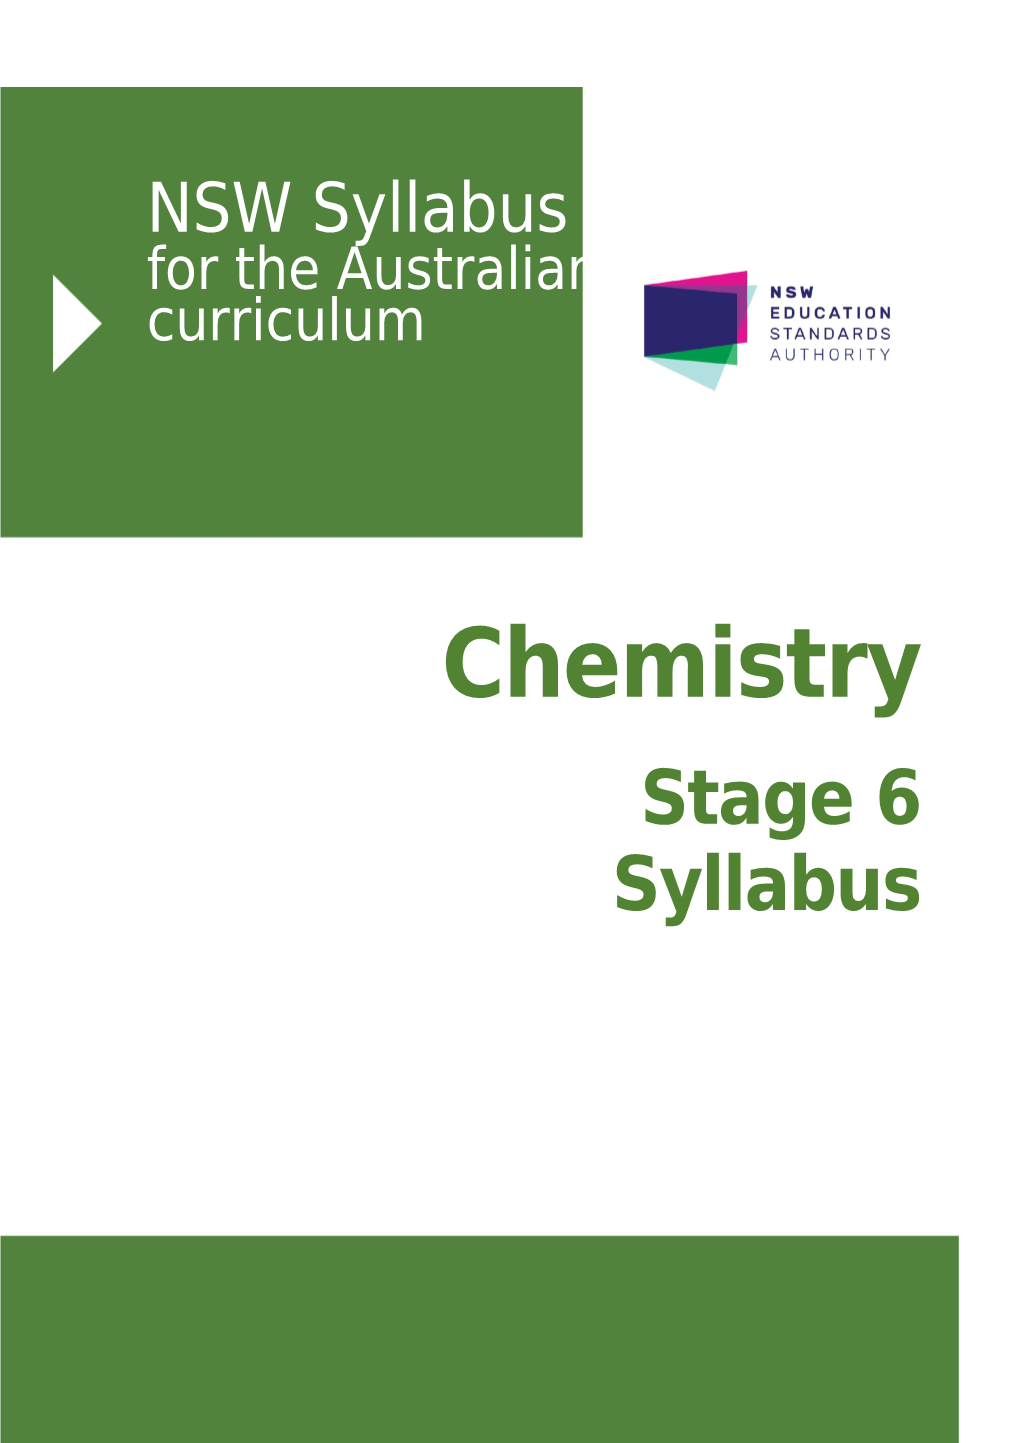 Chemistry Stage 6 Syllabus 2017